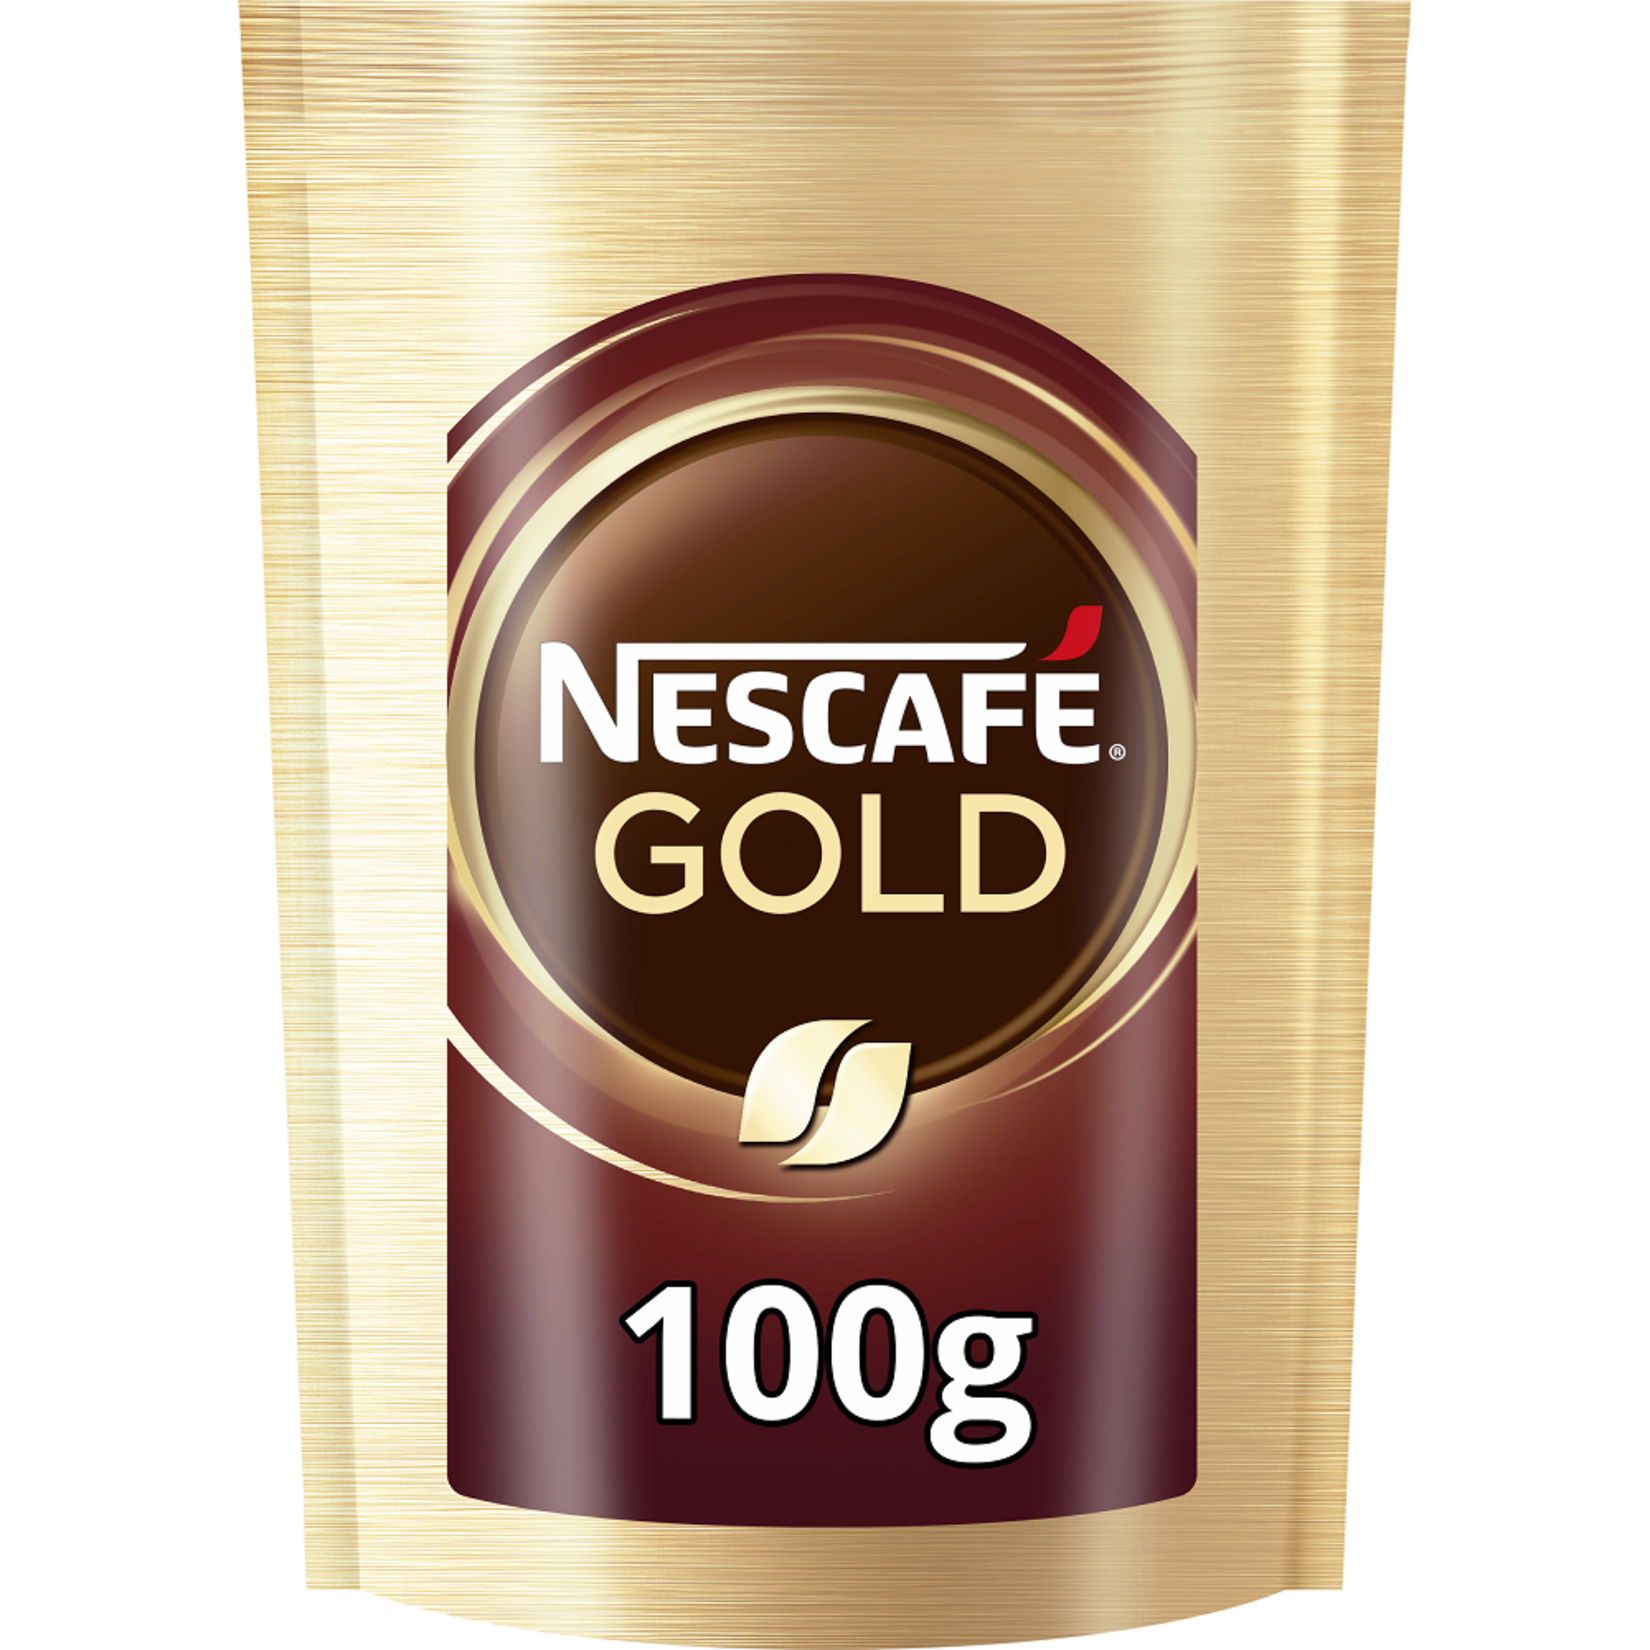 Nescafe Gold Economic Package Turcamart G 100 – ®